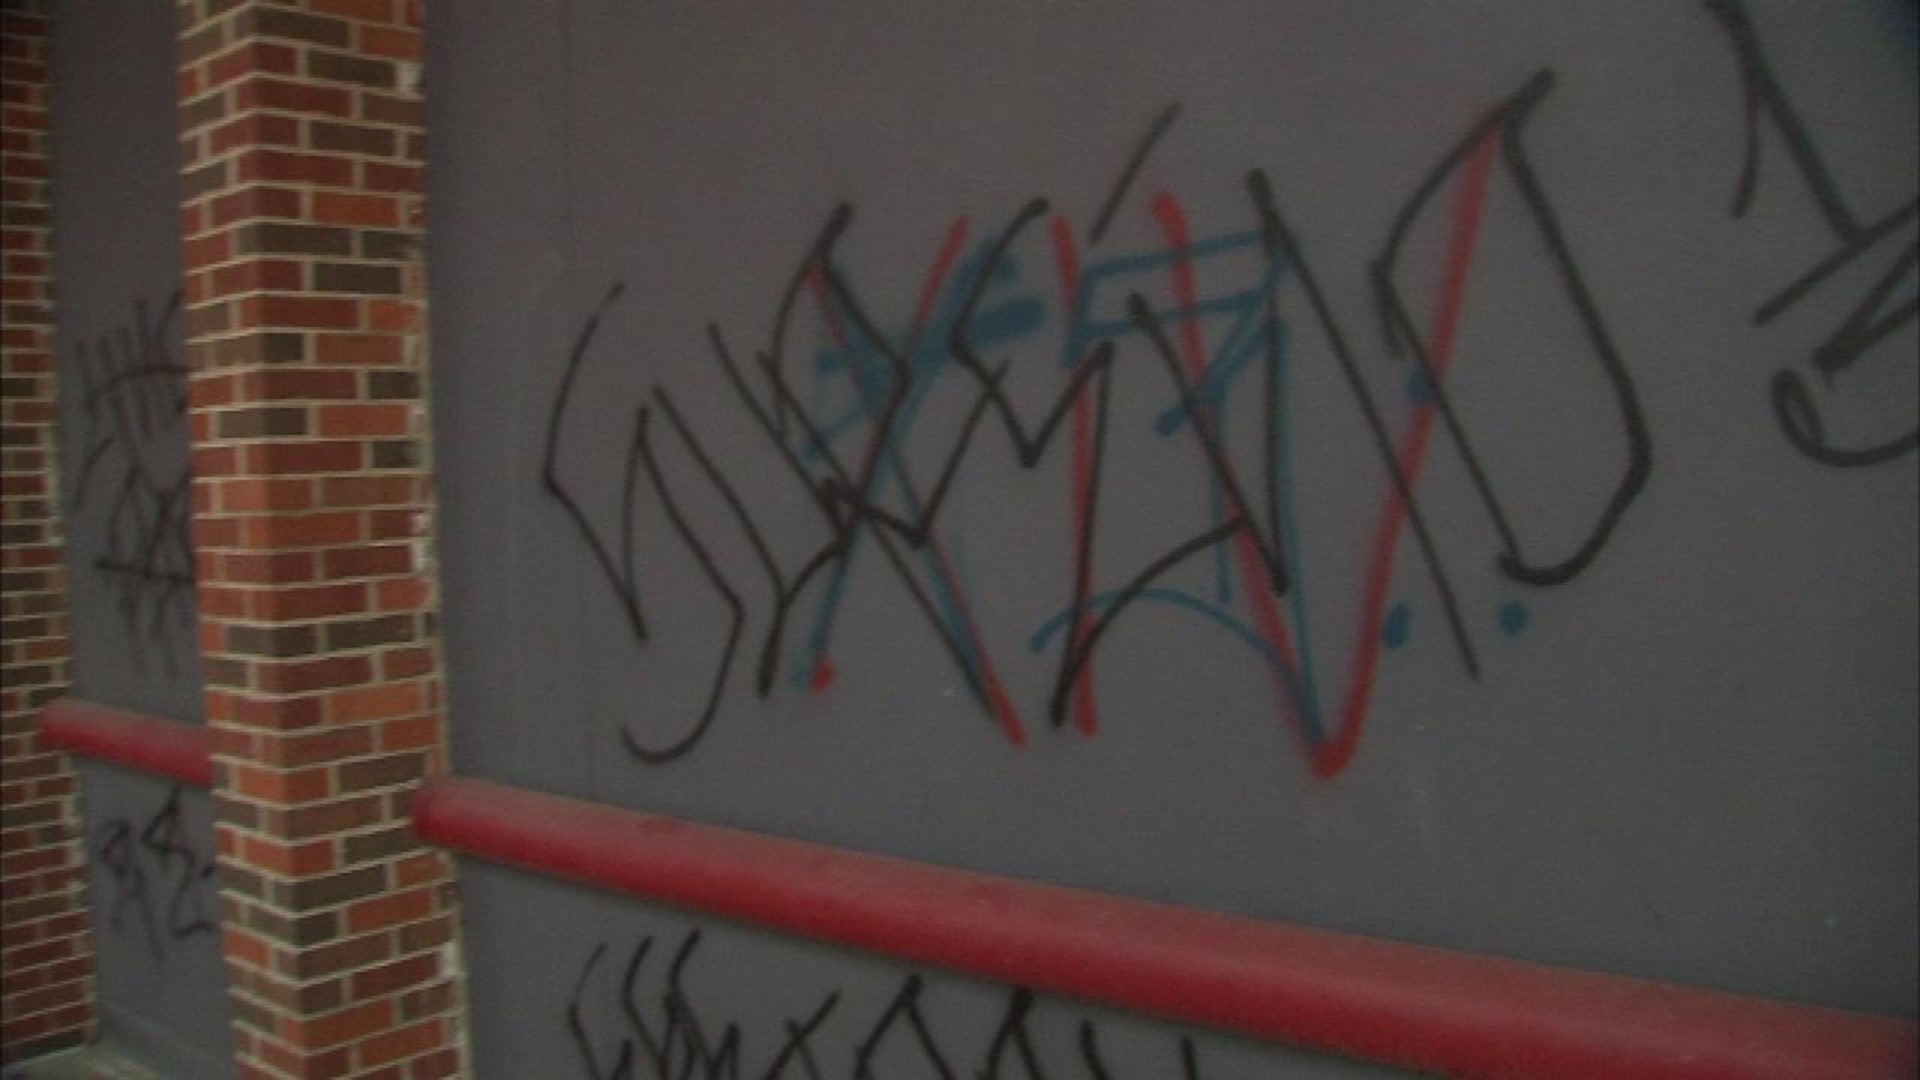 Columbus Graffiti Sends Gang Messages With Symbols, Designs